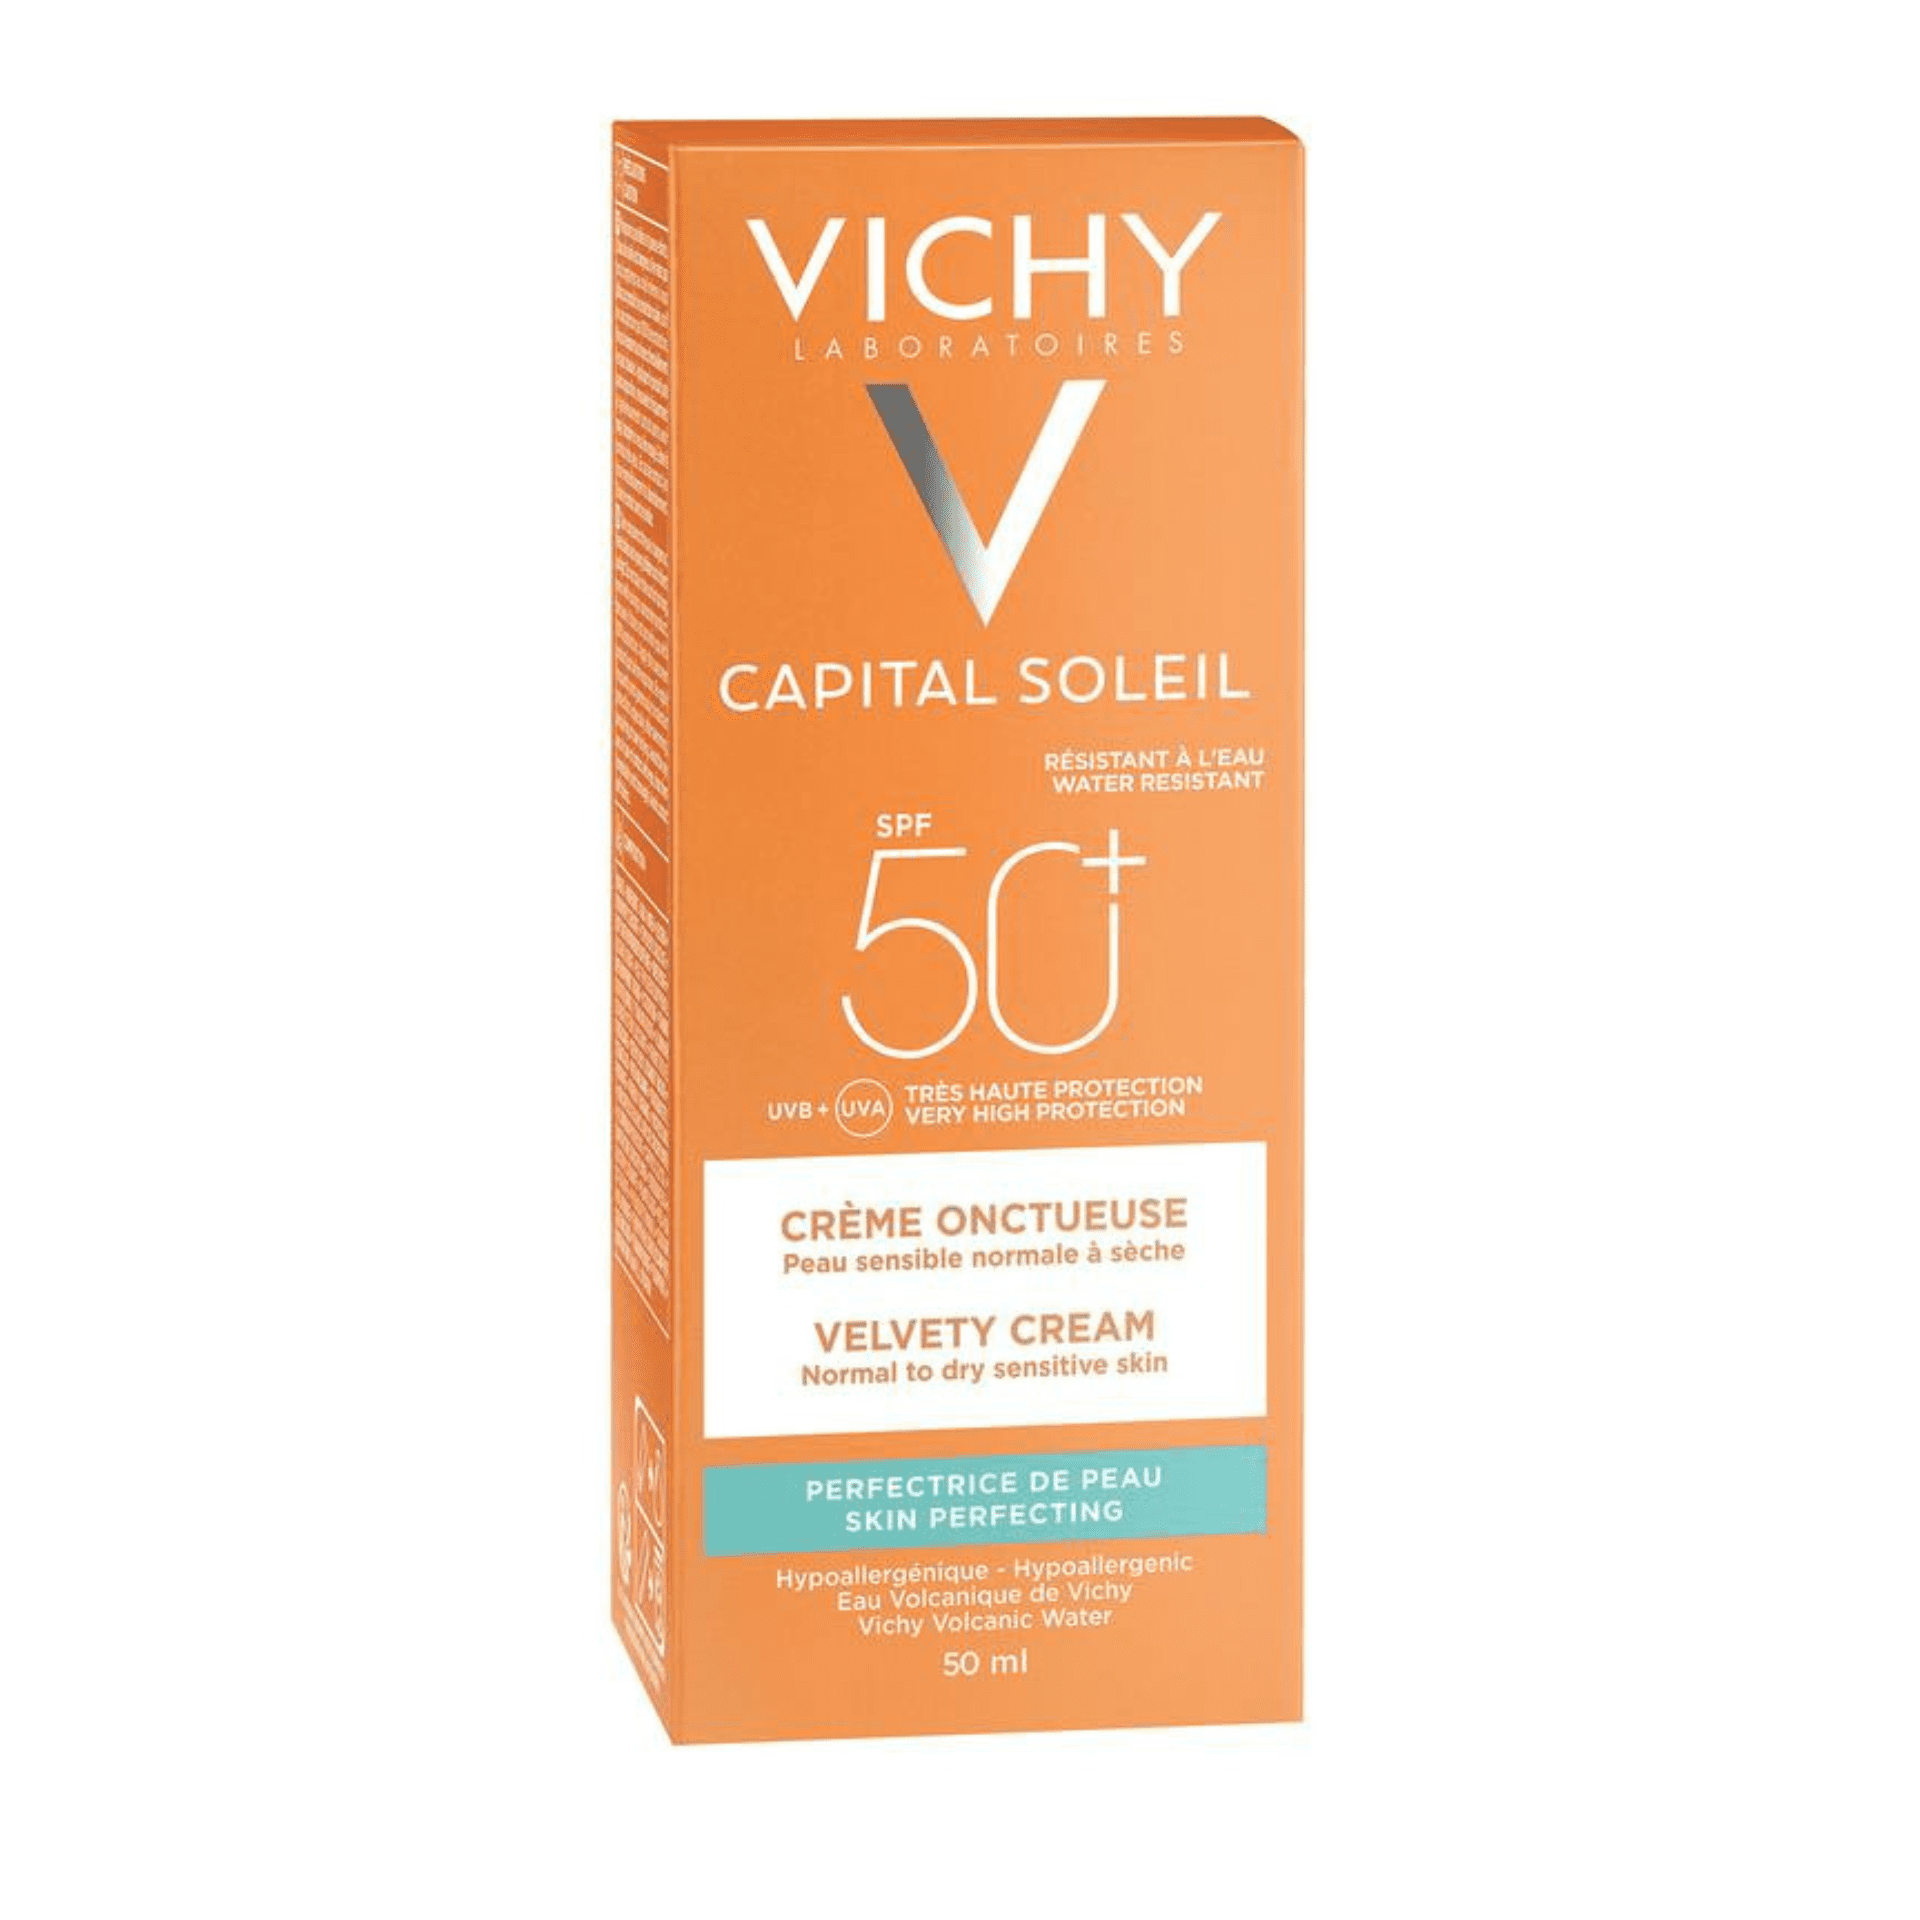 Vichy Capital Soleil SPF50+ Velvelty Cream